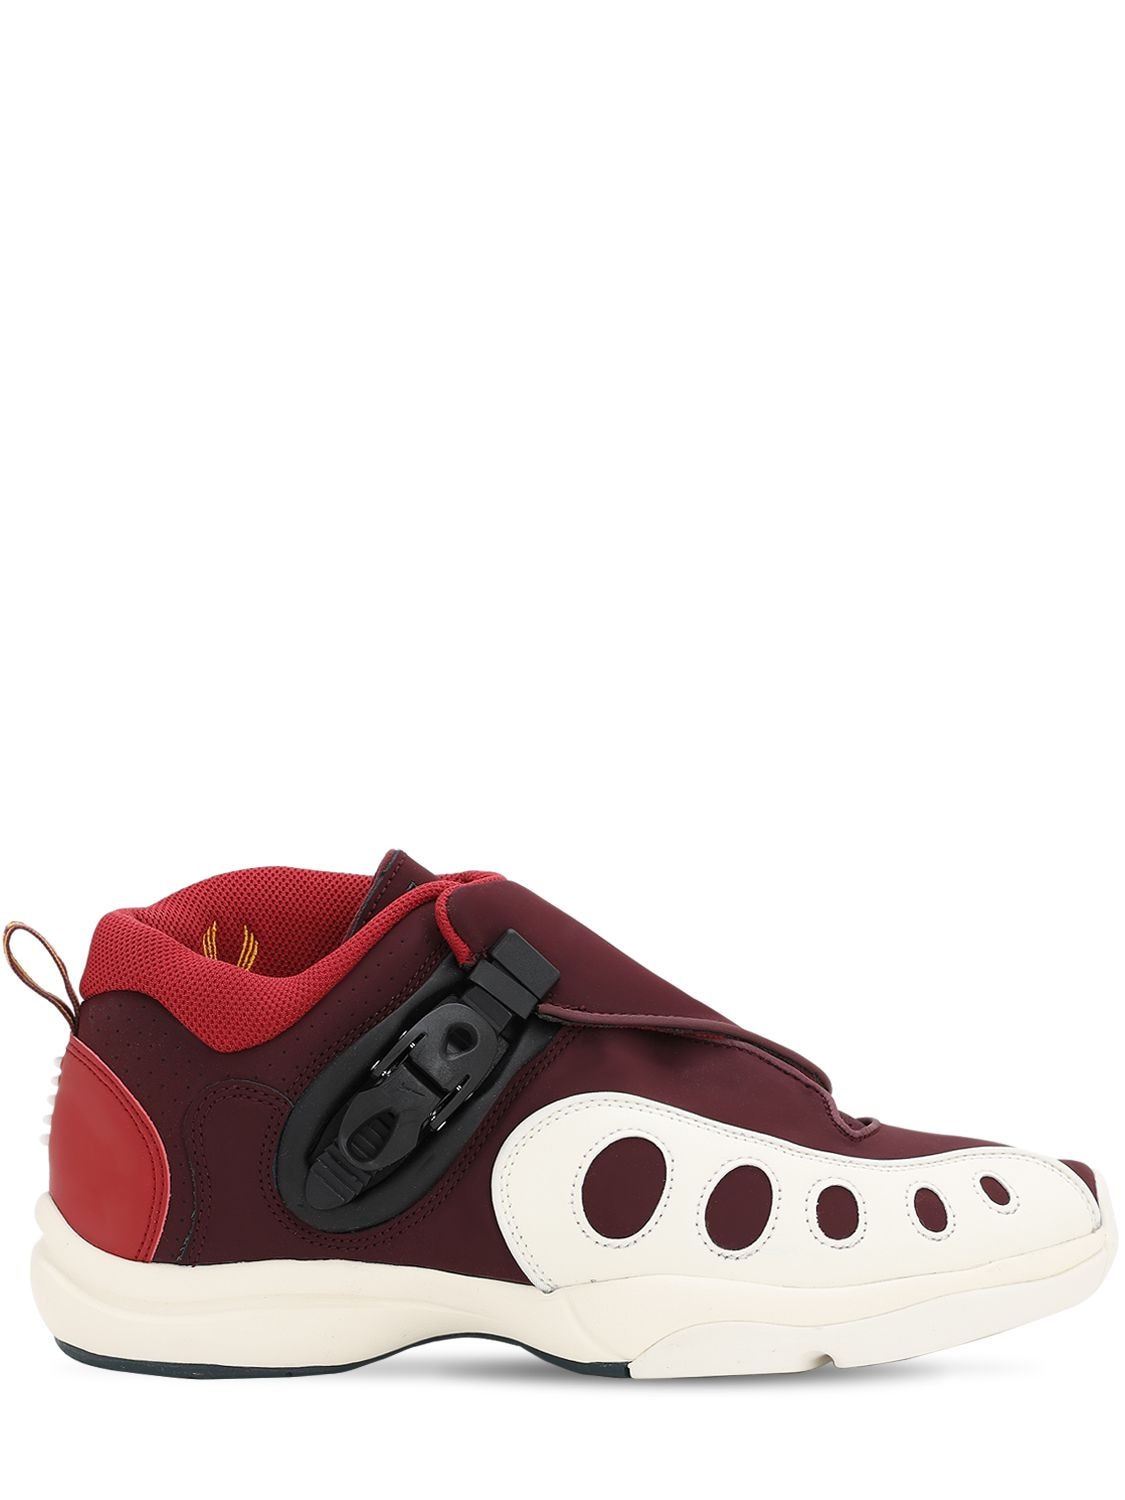 Nike Zoom Gp Gary Payton Sneakers